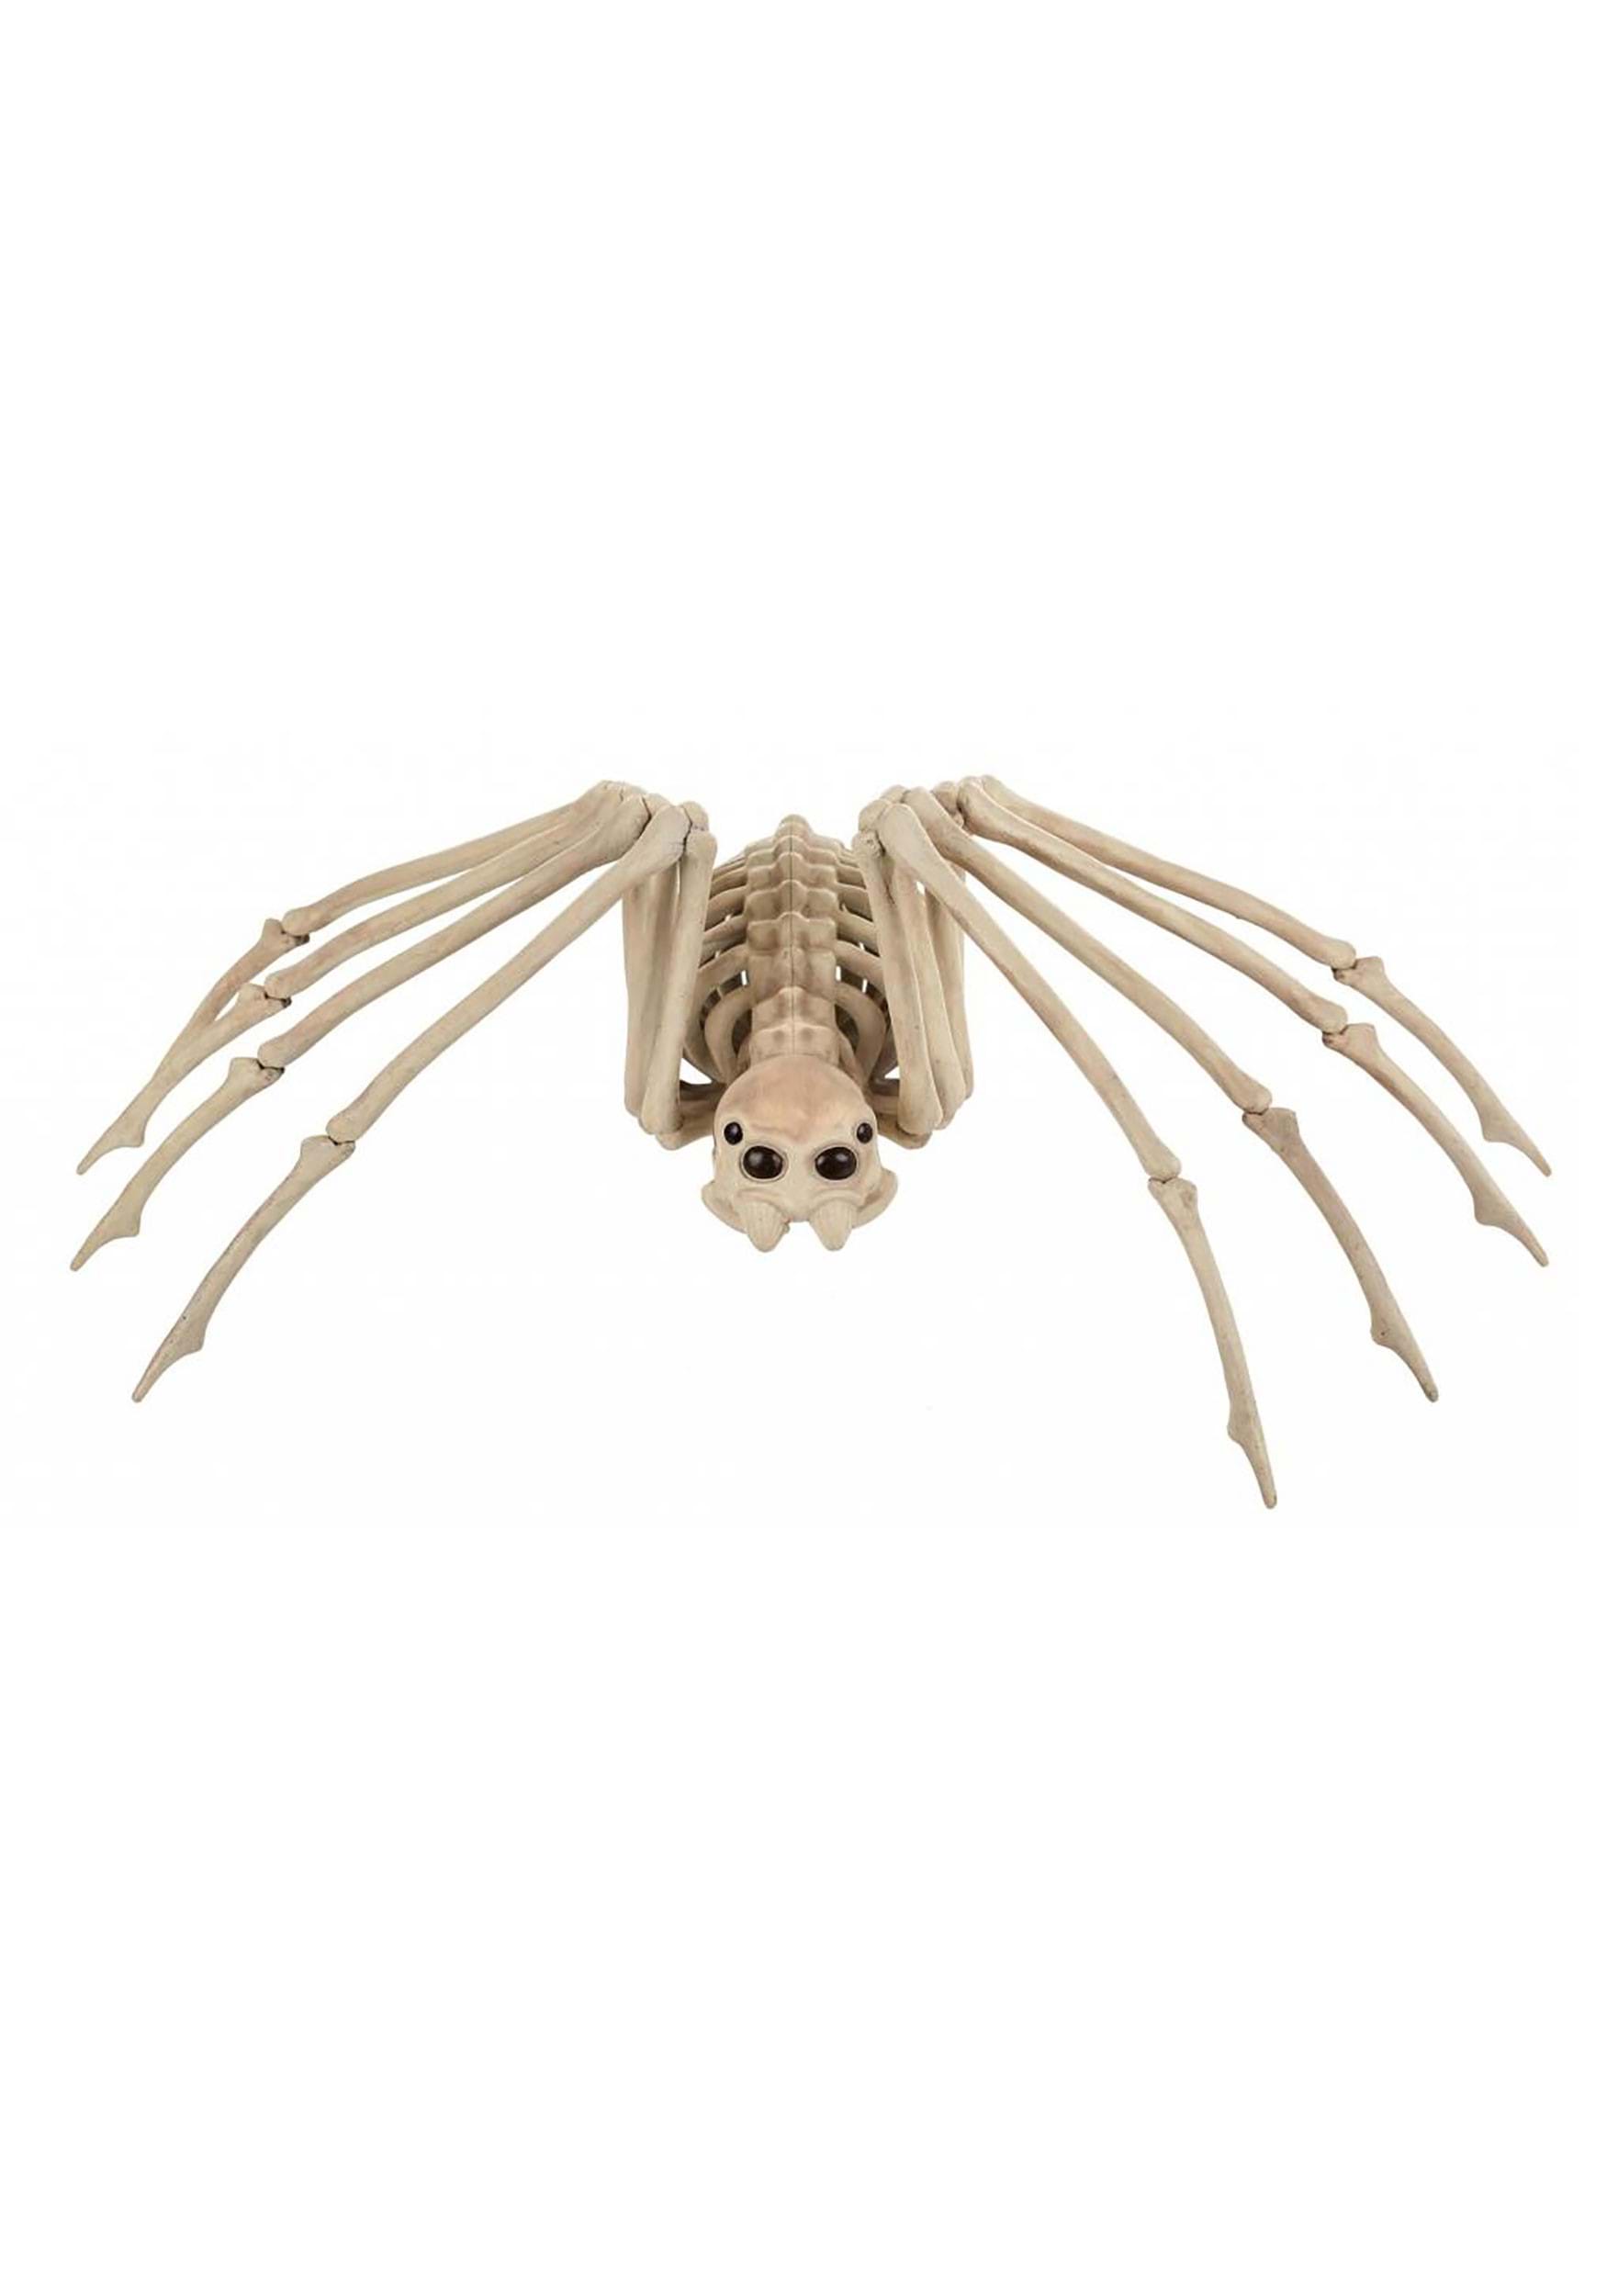 Skeleton Spider Decoration